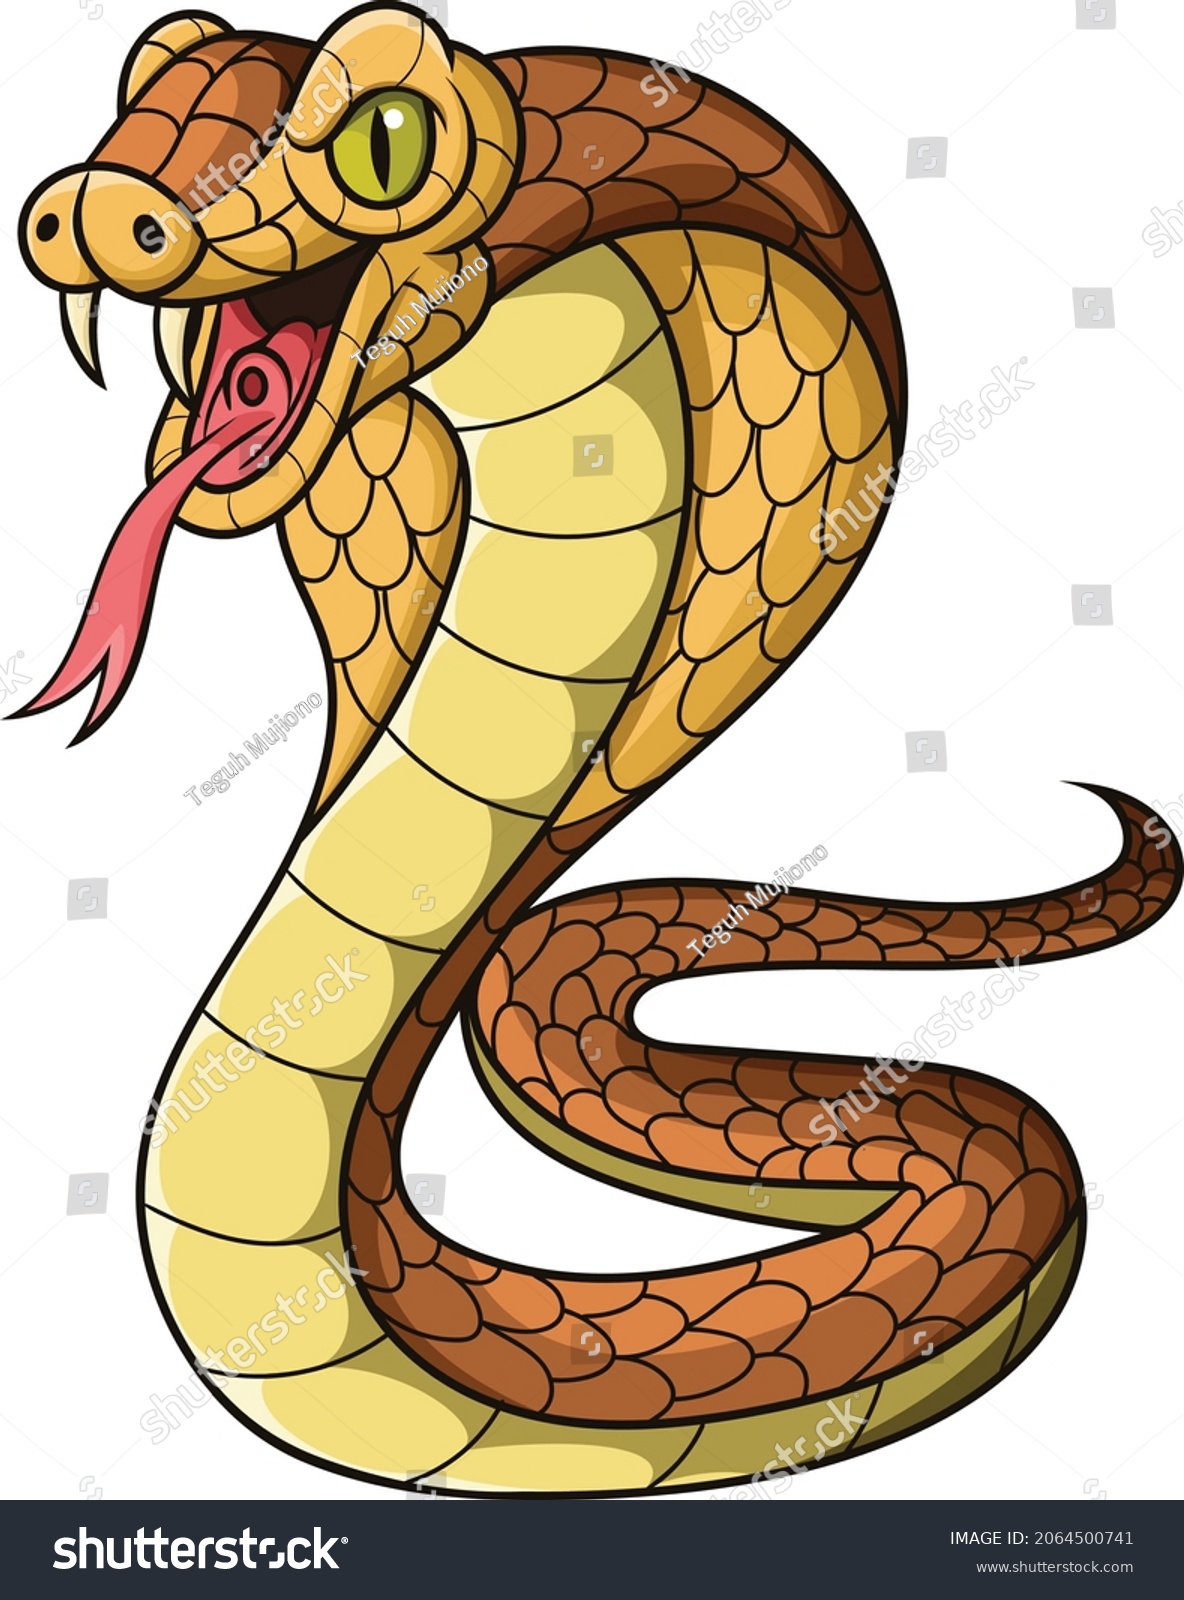 SVG of Cartoon king cobra snake on white background svg